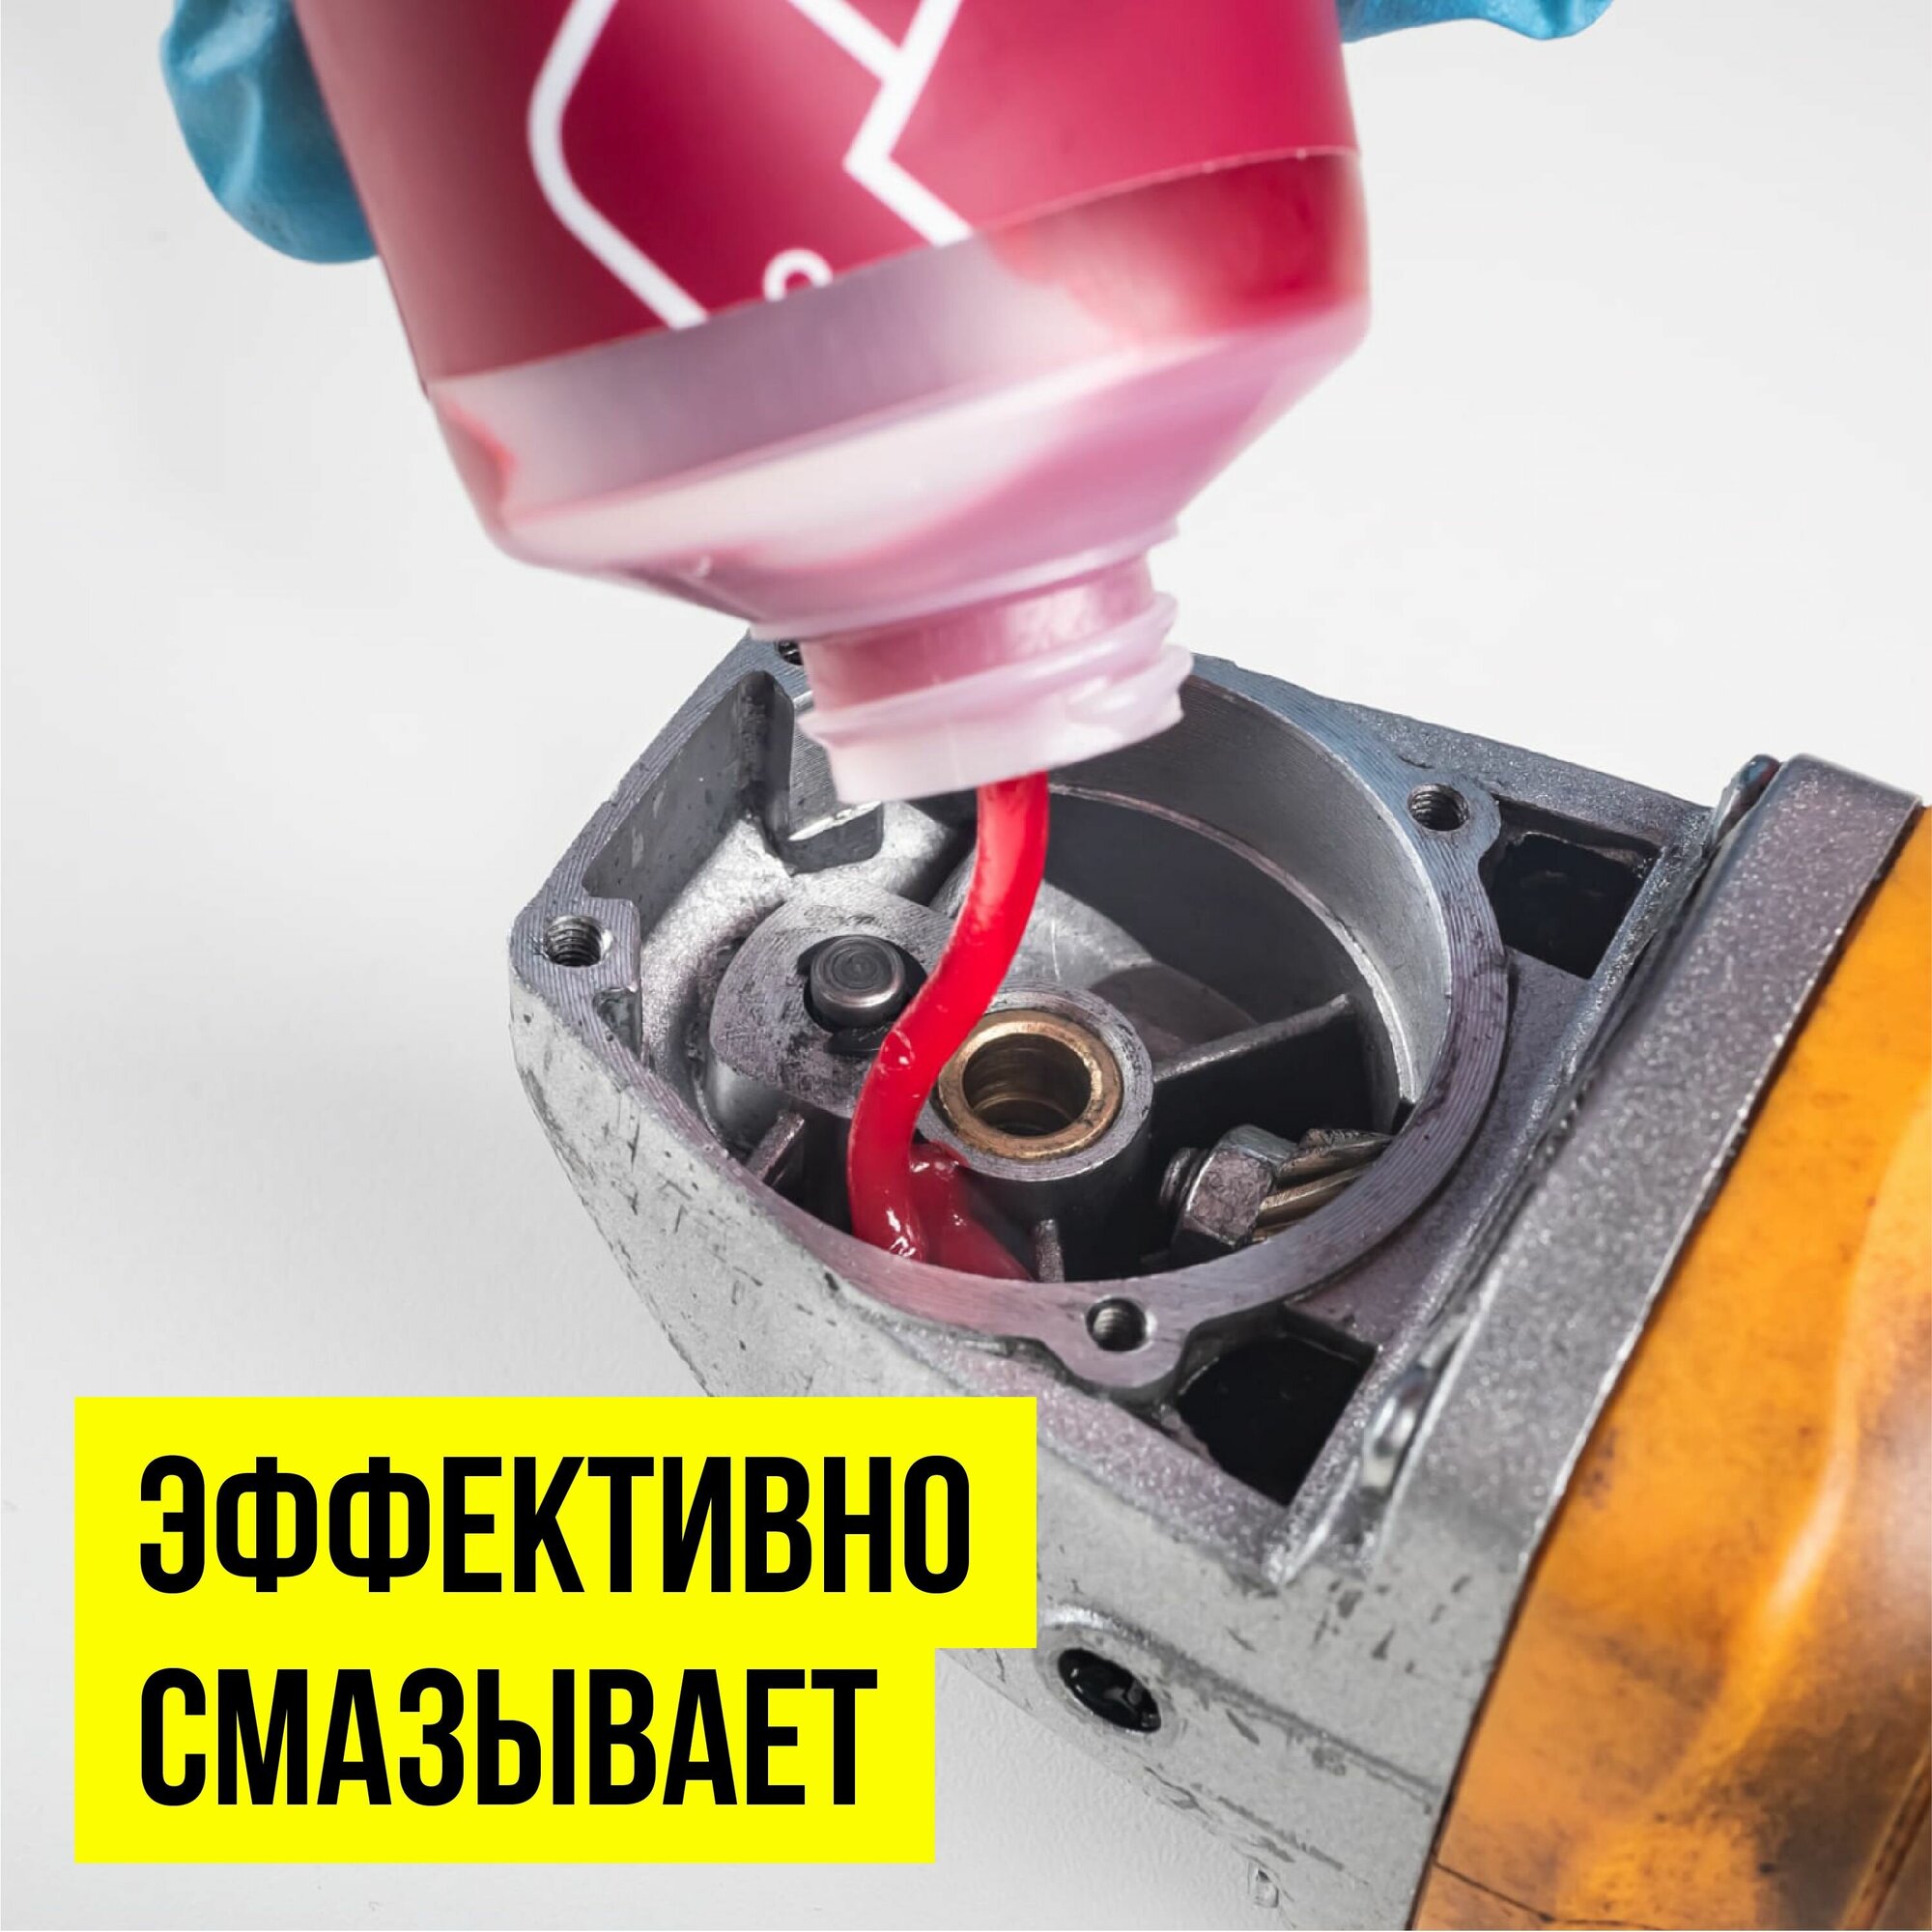 Смазка для обслуживания электроинструмента МС Ultra-1 200 гр туба, ВМПАВТО